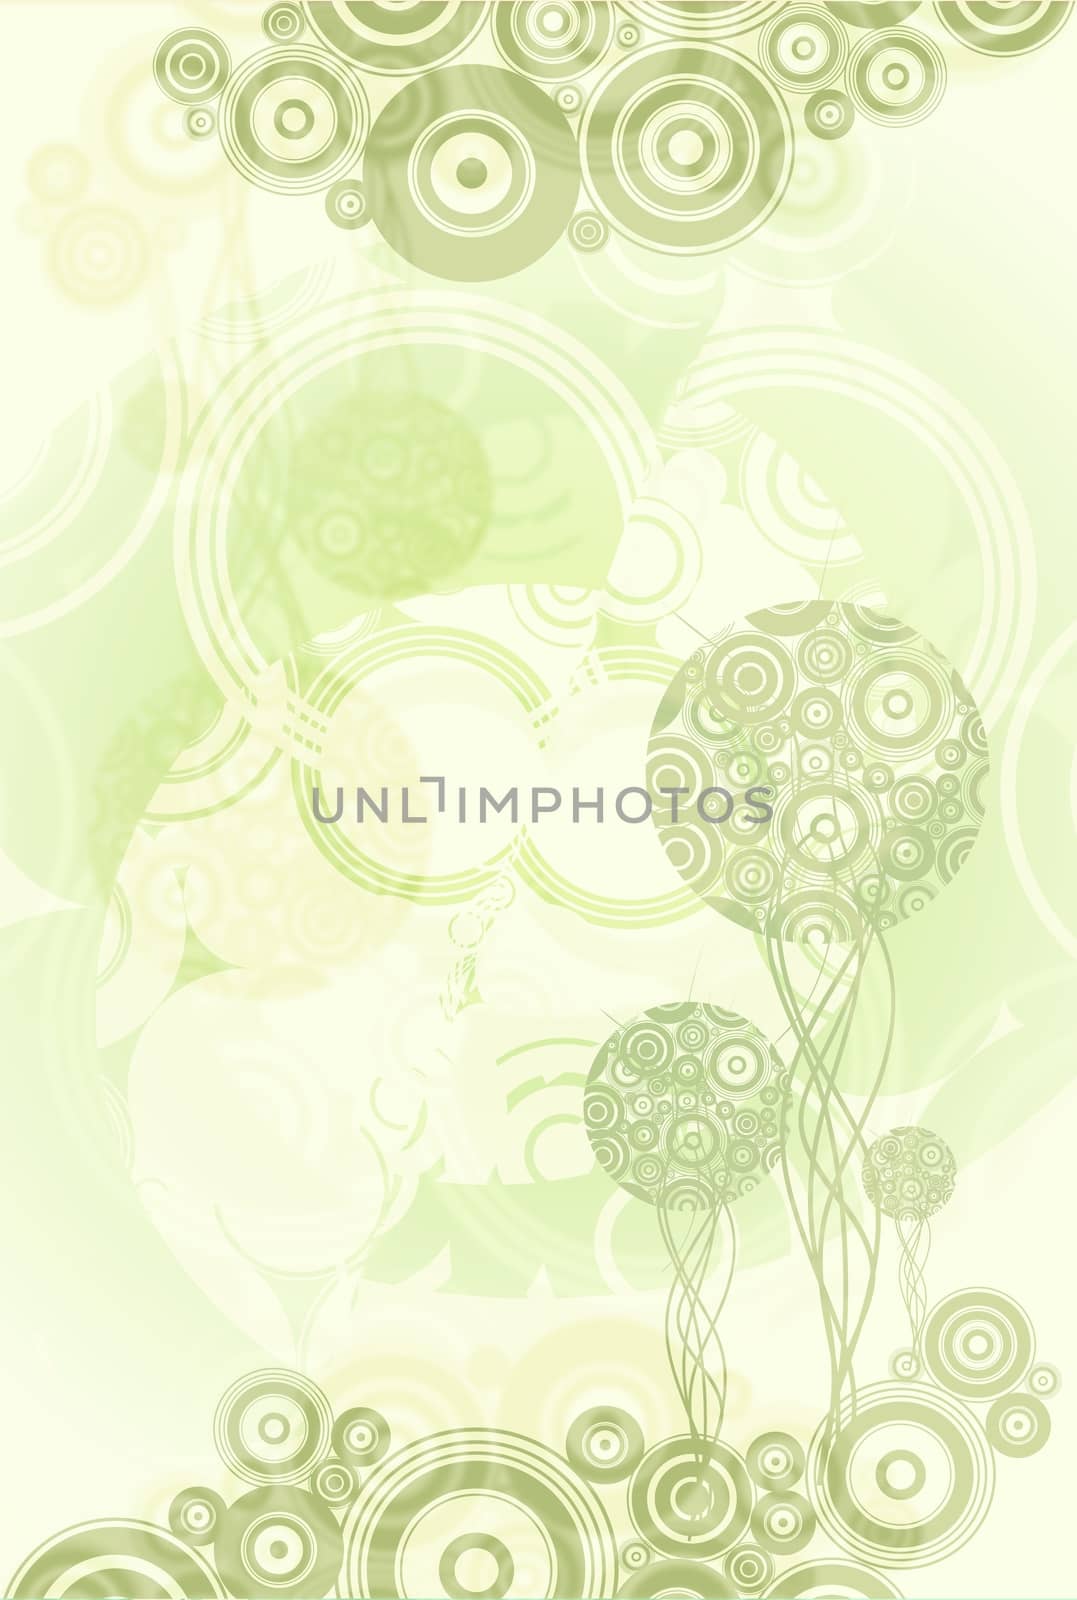 Abstract Light Green Floral Illustration - Vertical Artistic Illustration